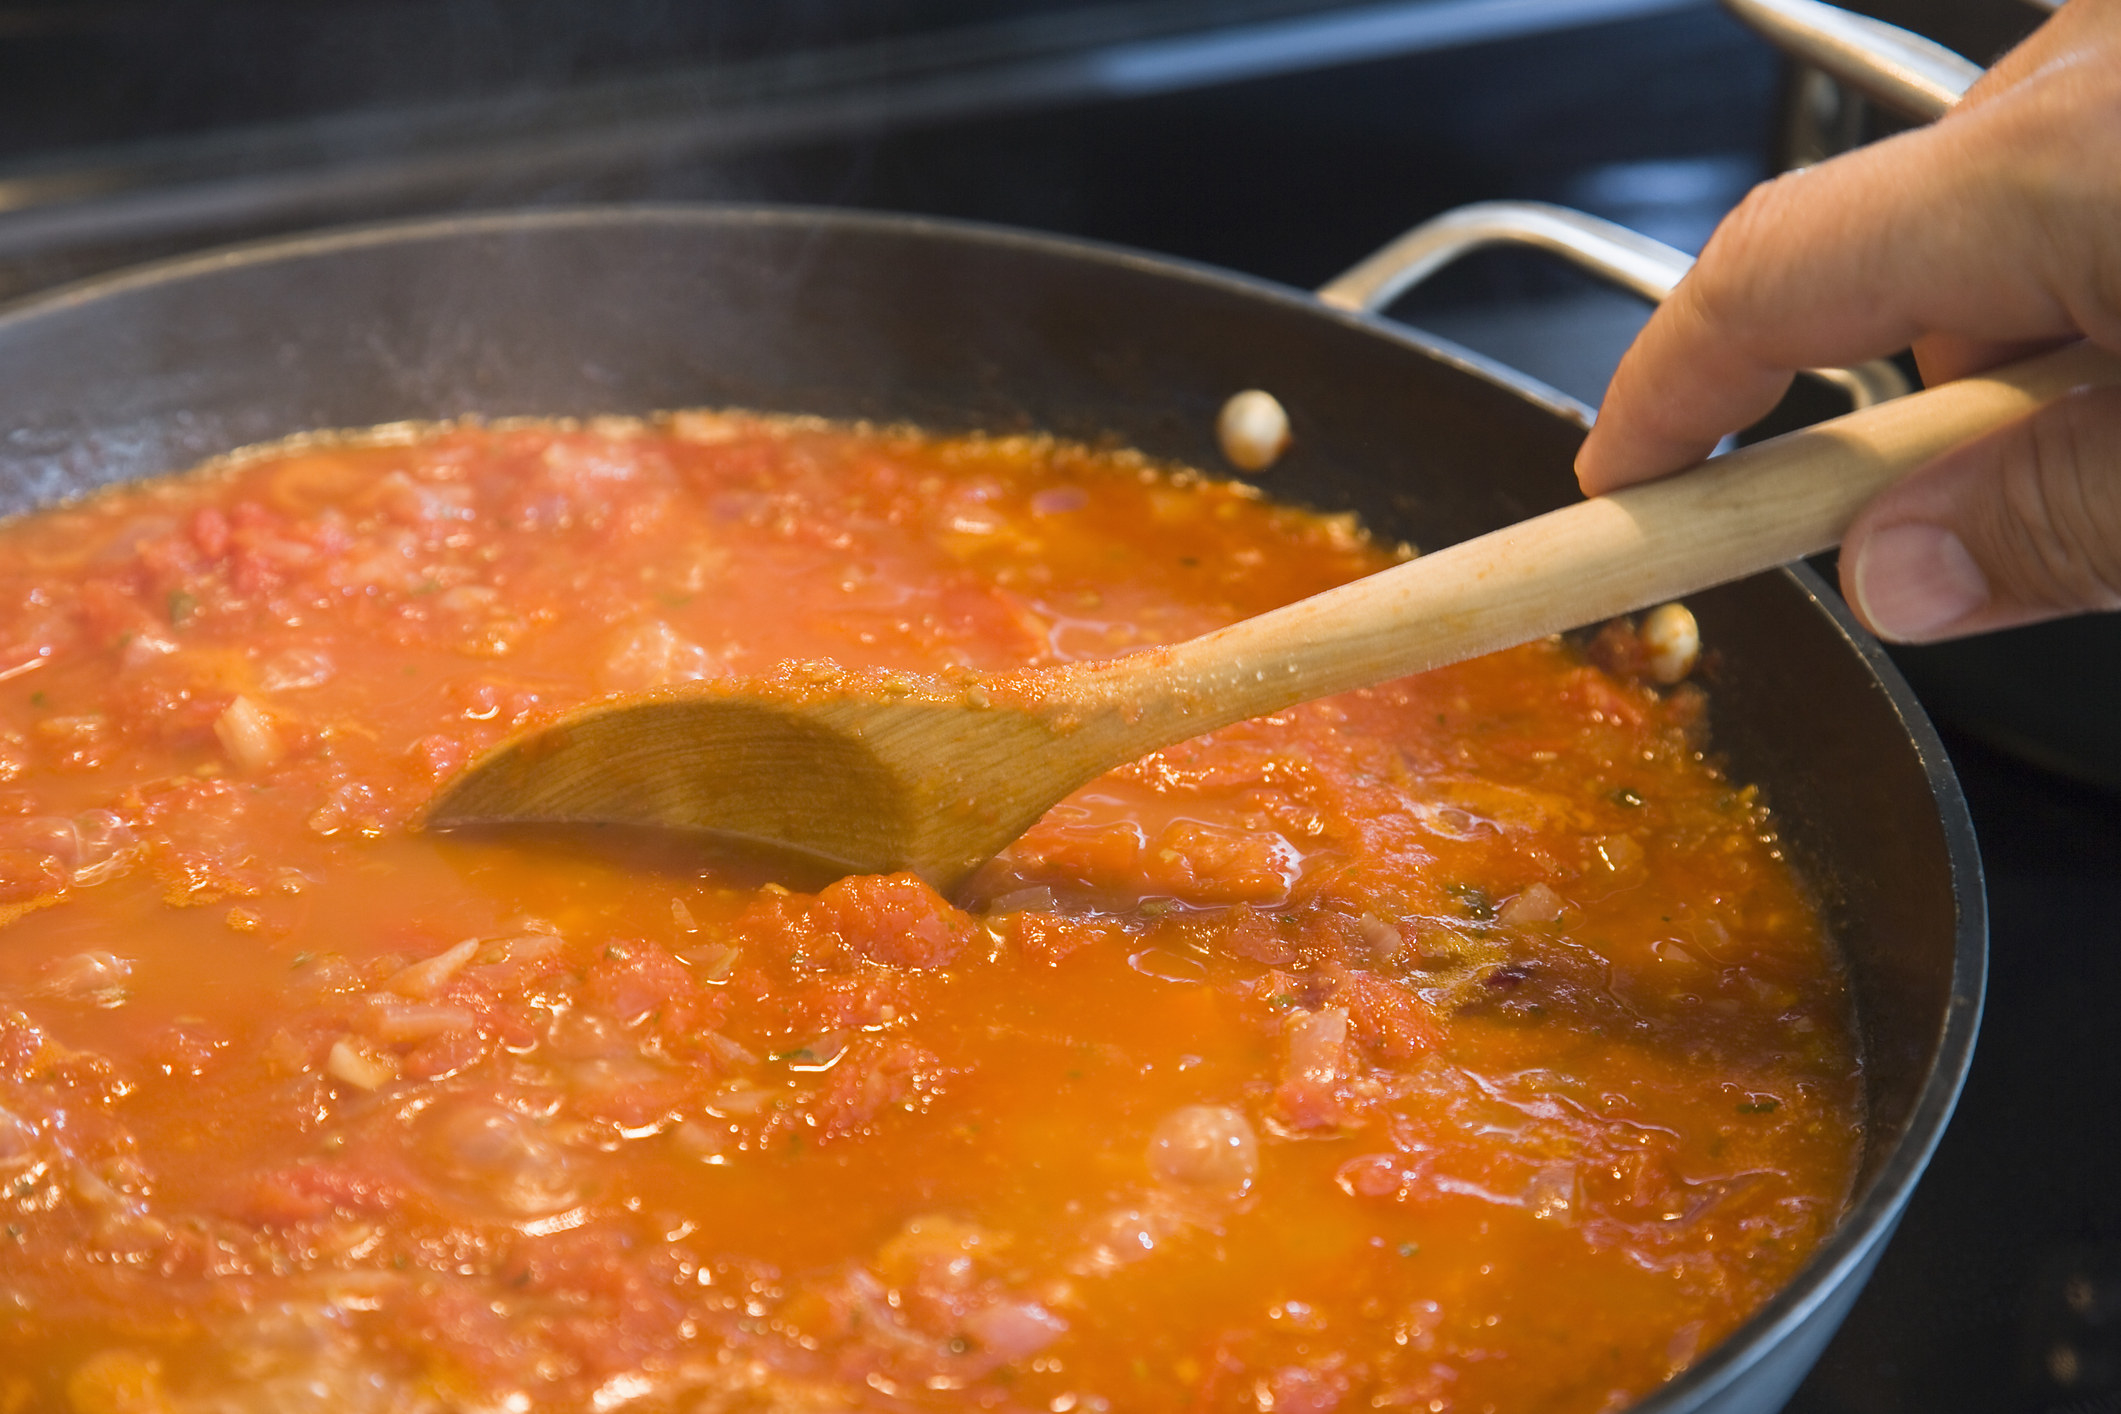 Stirring a pot of tomato sauce.